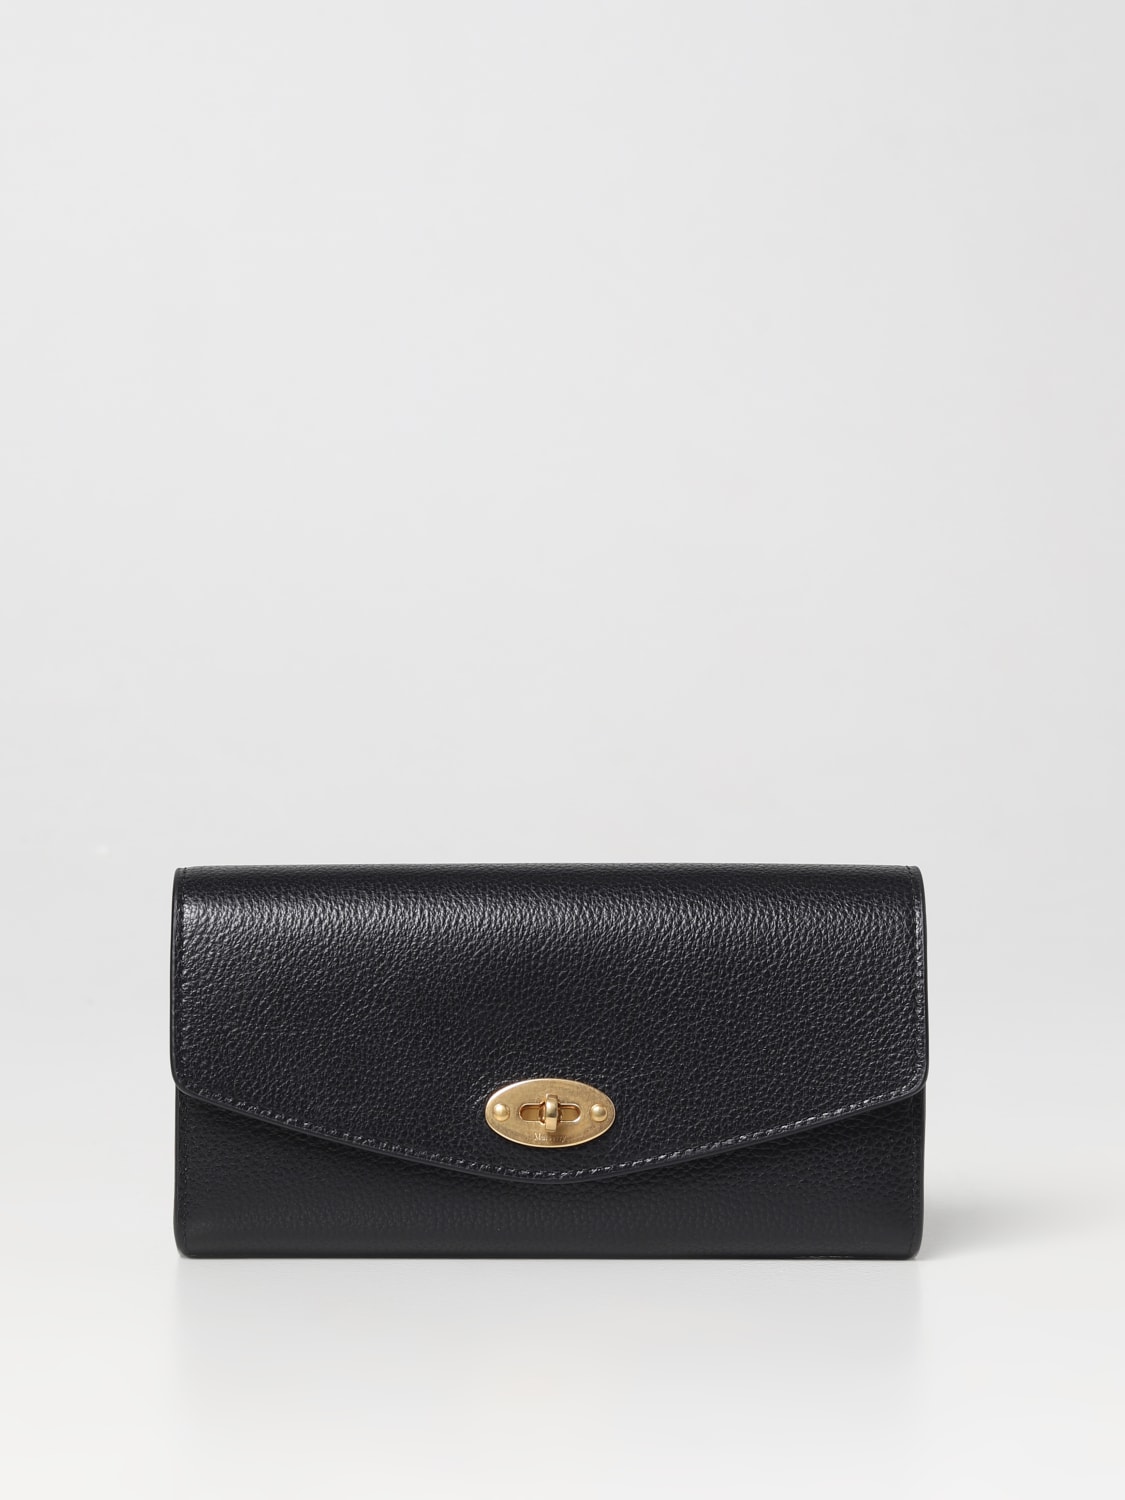 Mulberry Handbags, Purses & Wallets for Women